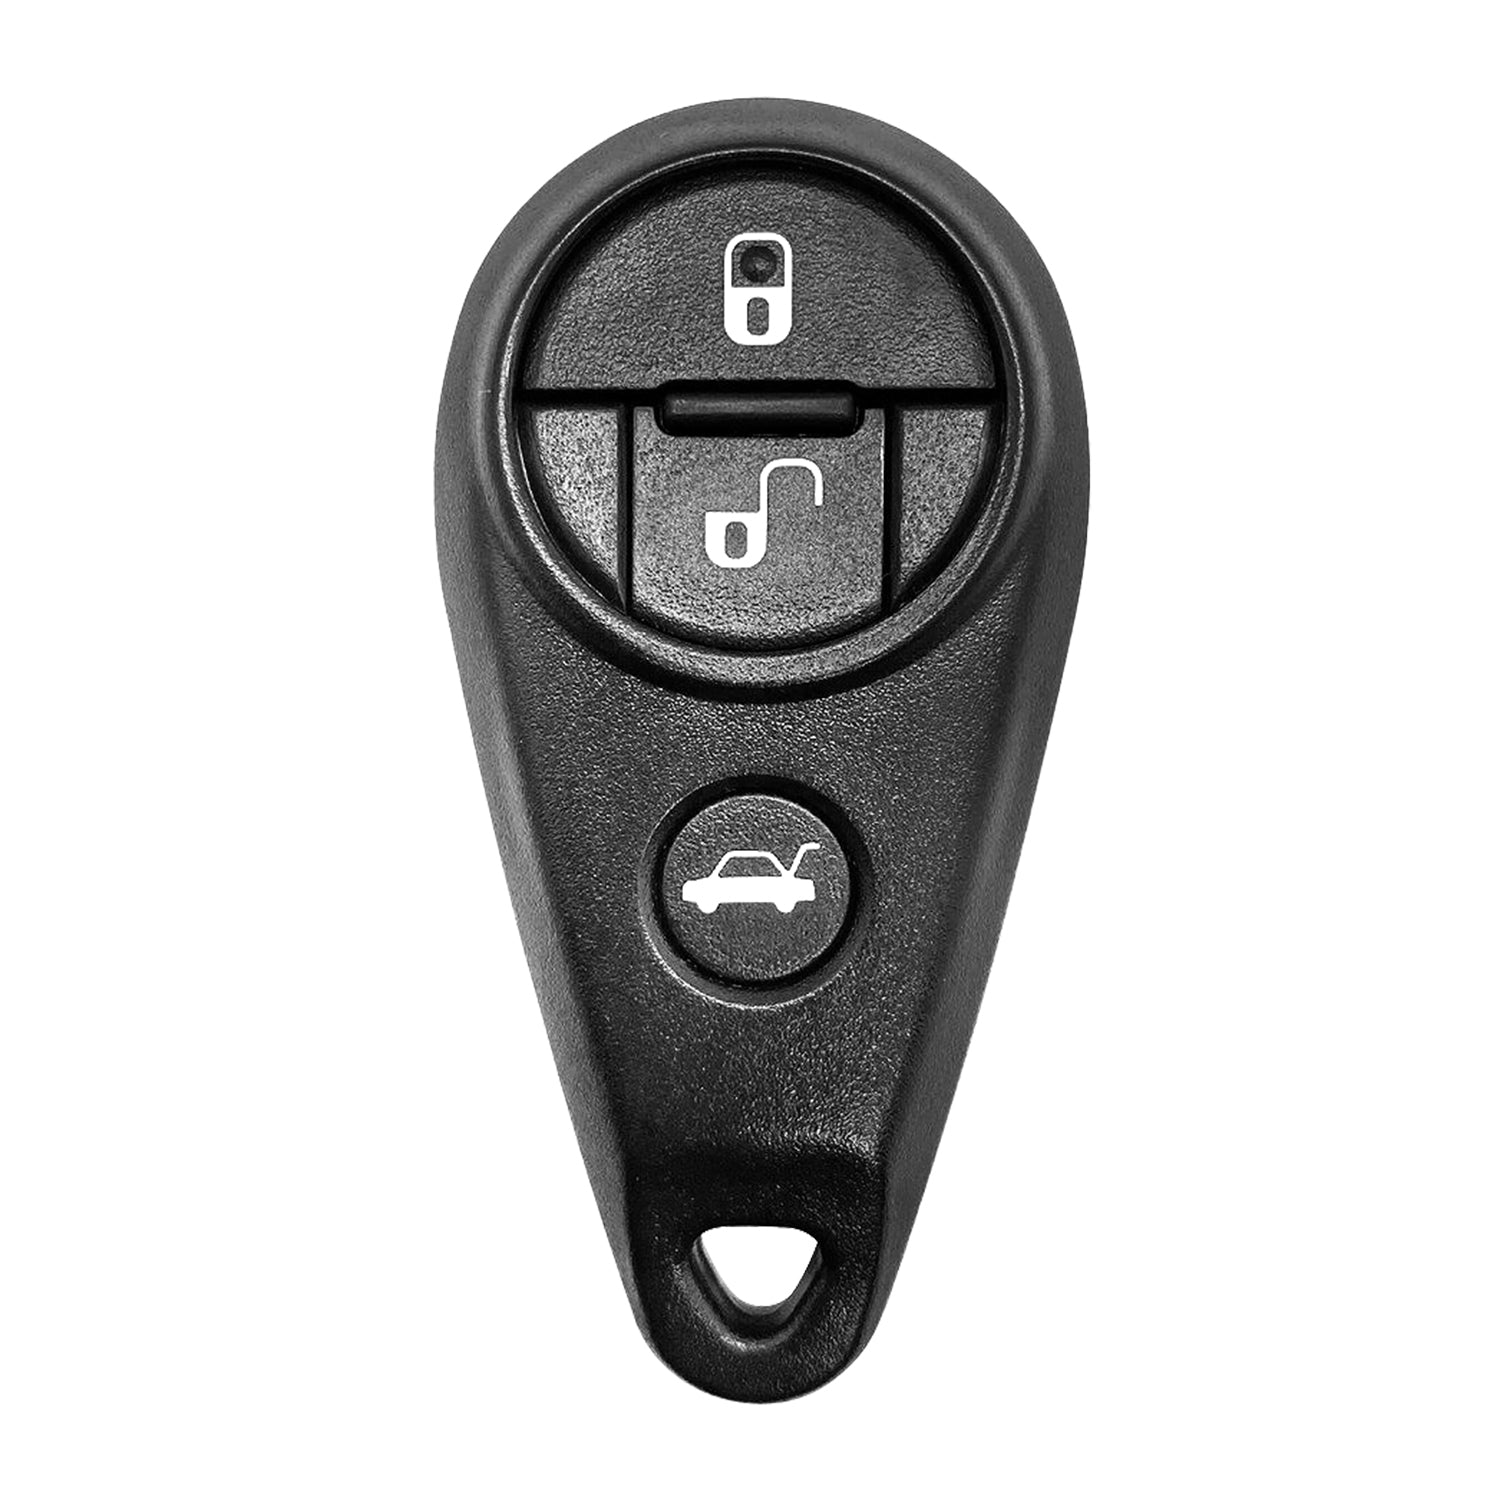 4 Button Keyless Entry Car Key Fob Remote for Subaru Forester Impreza Legacy Outback B9 Tribeca NHVWB1U711 88036 SC030